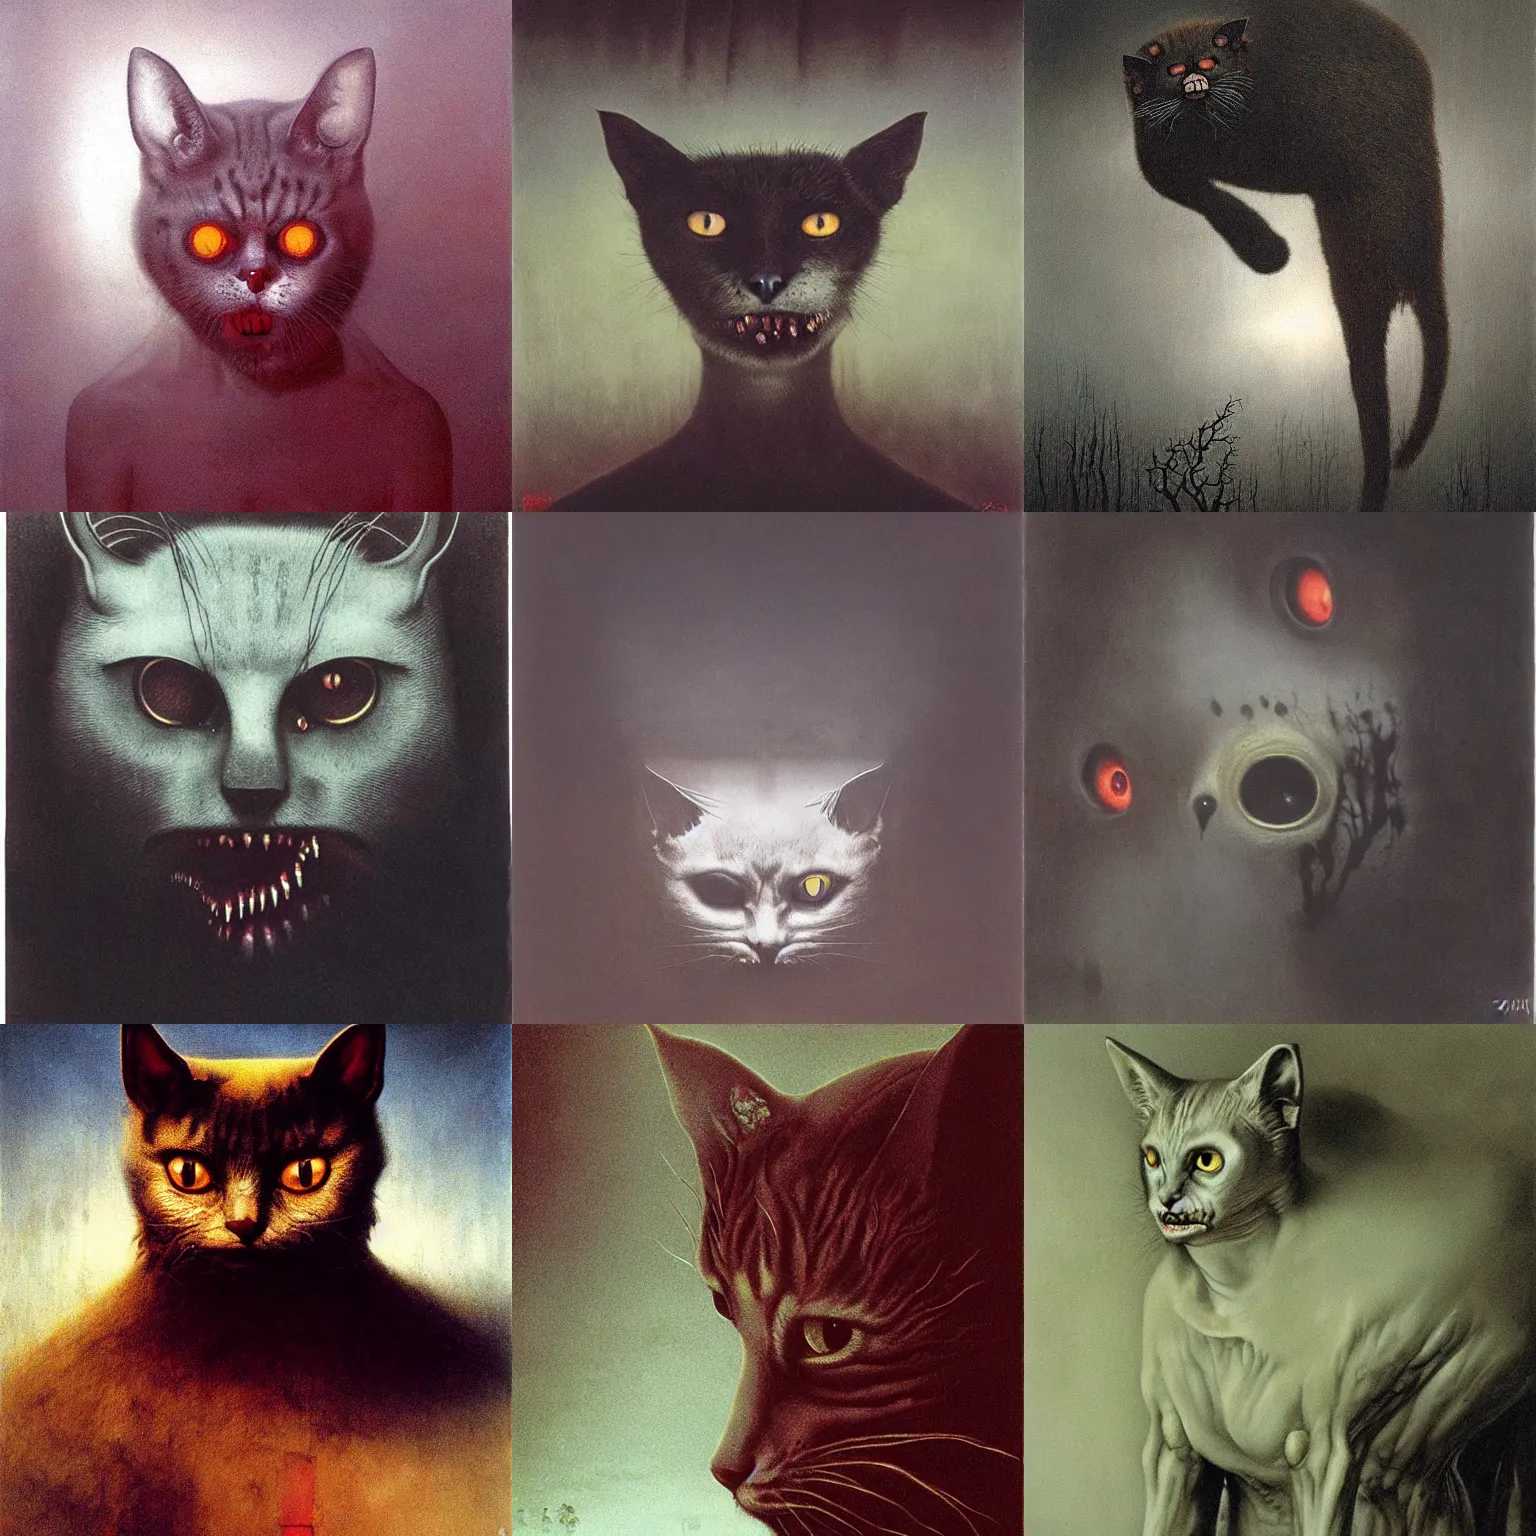 Prompt: zombie cat. horrifying, eerie, bloody. gloomy lighting. white eyes. matte painting by zdzisław beksinski.